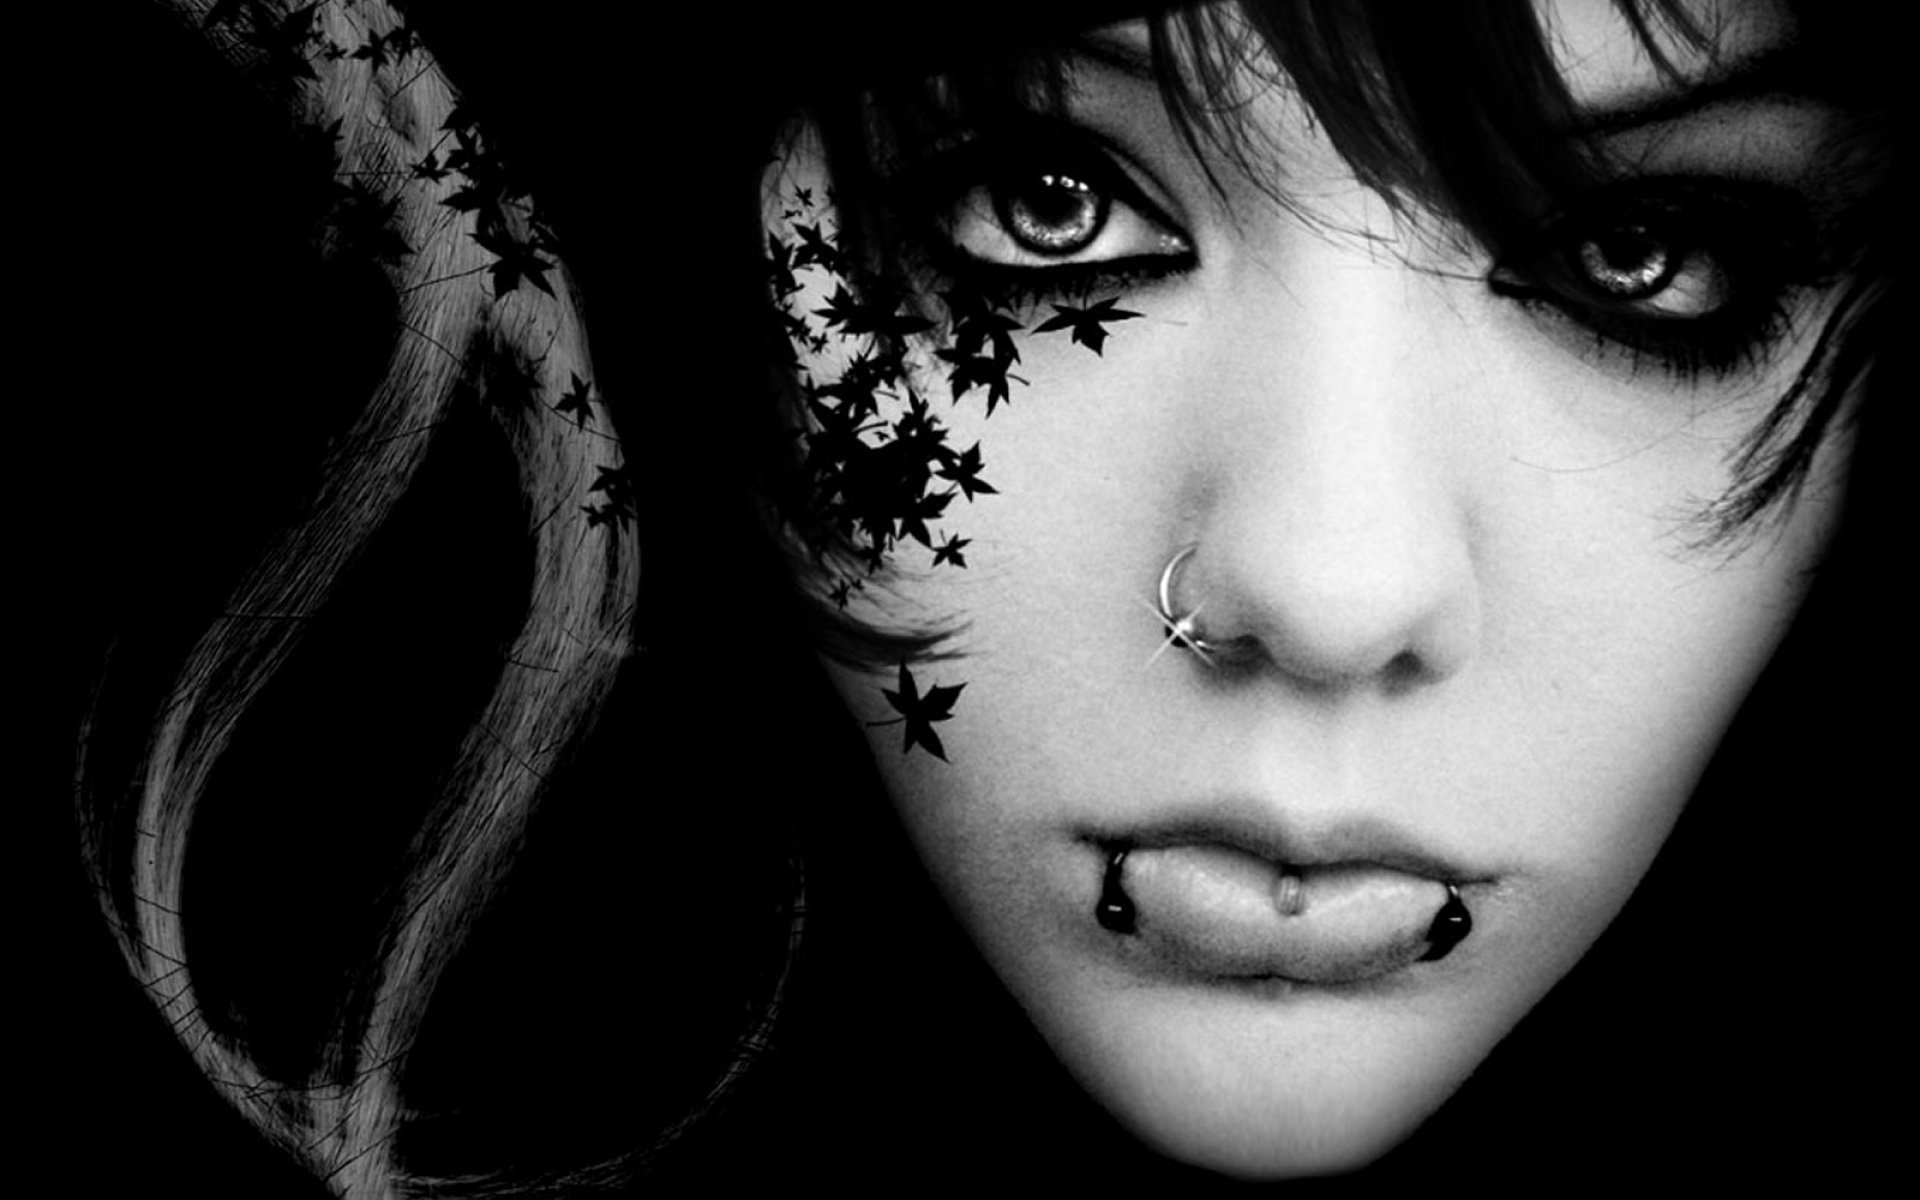 Gothic Art: Dark mood, Fantasy style, Facial piercings, Goth fashion, Black and white. 1920x1200 HD Wallpaper.